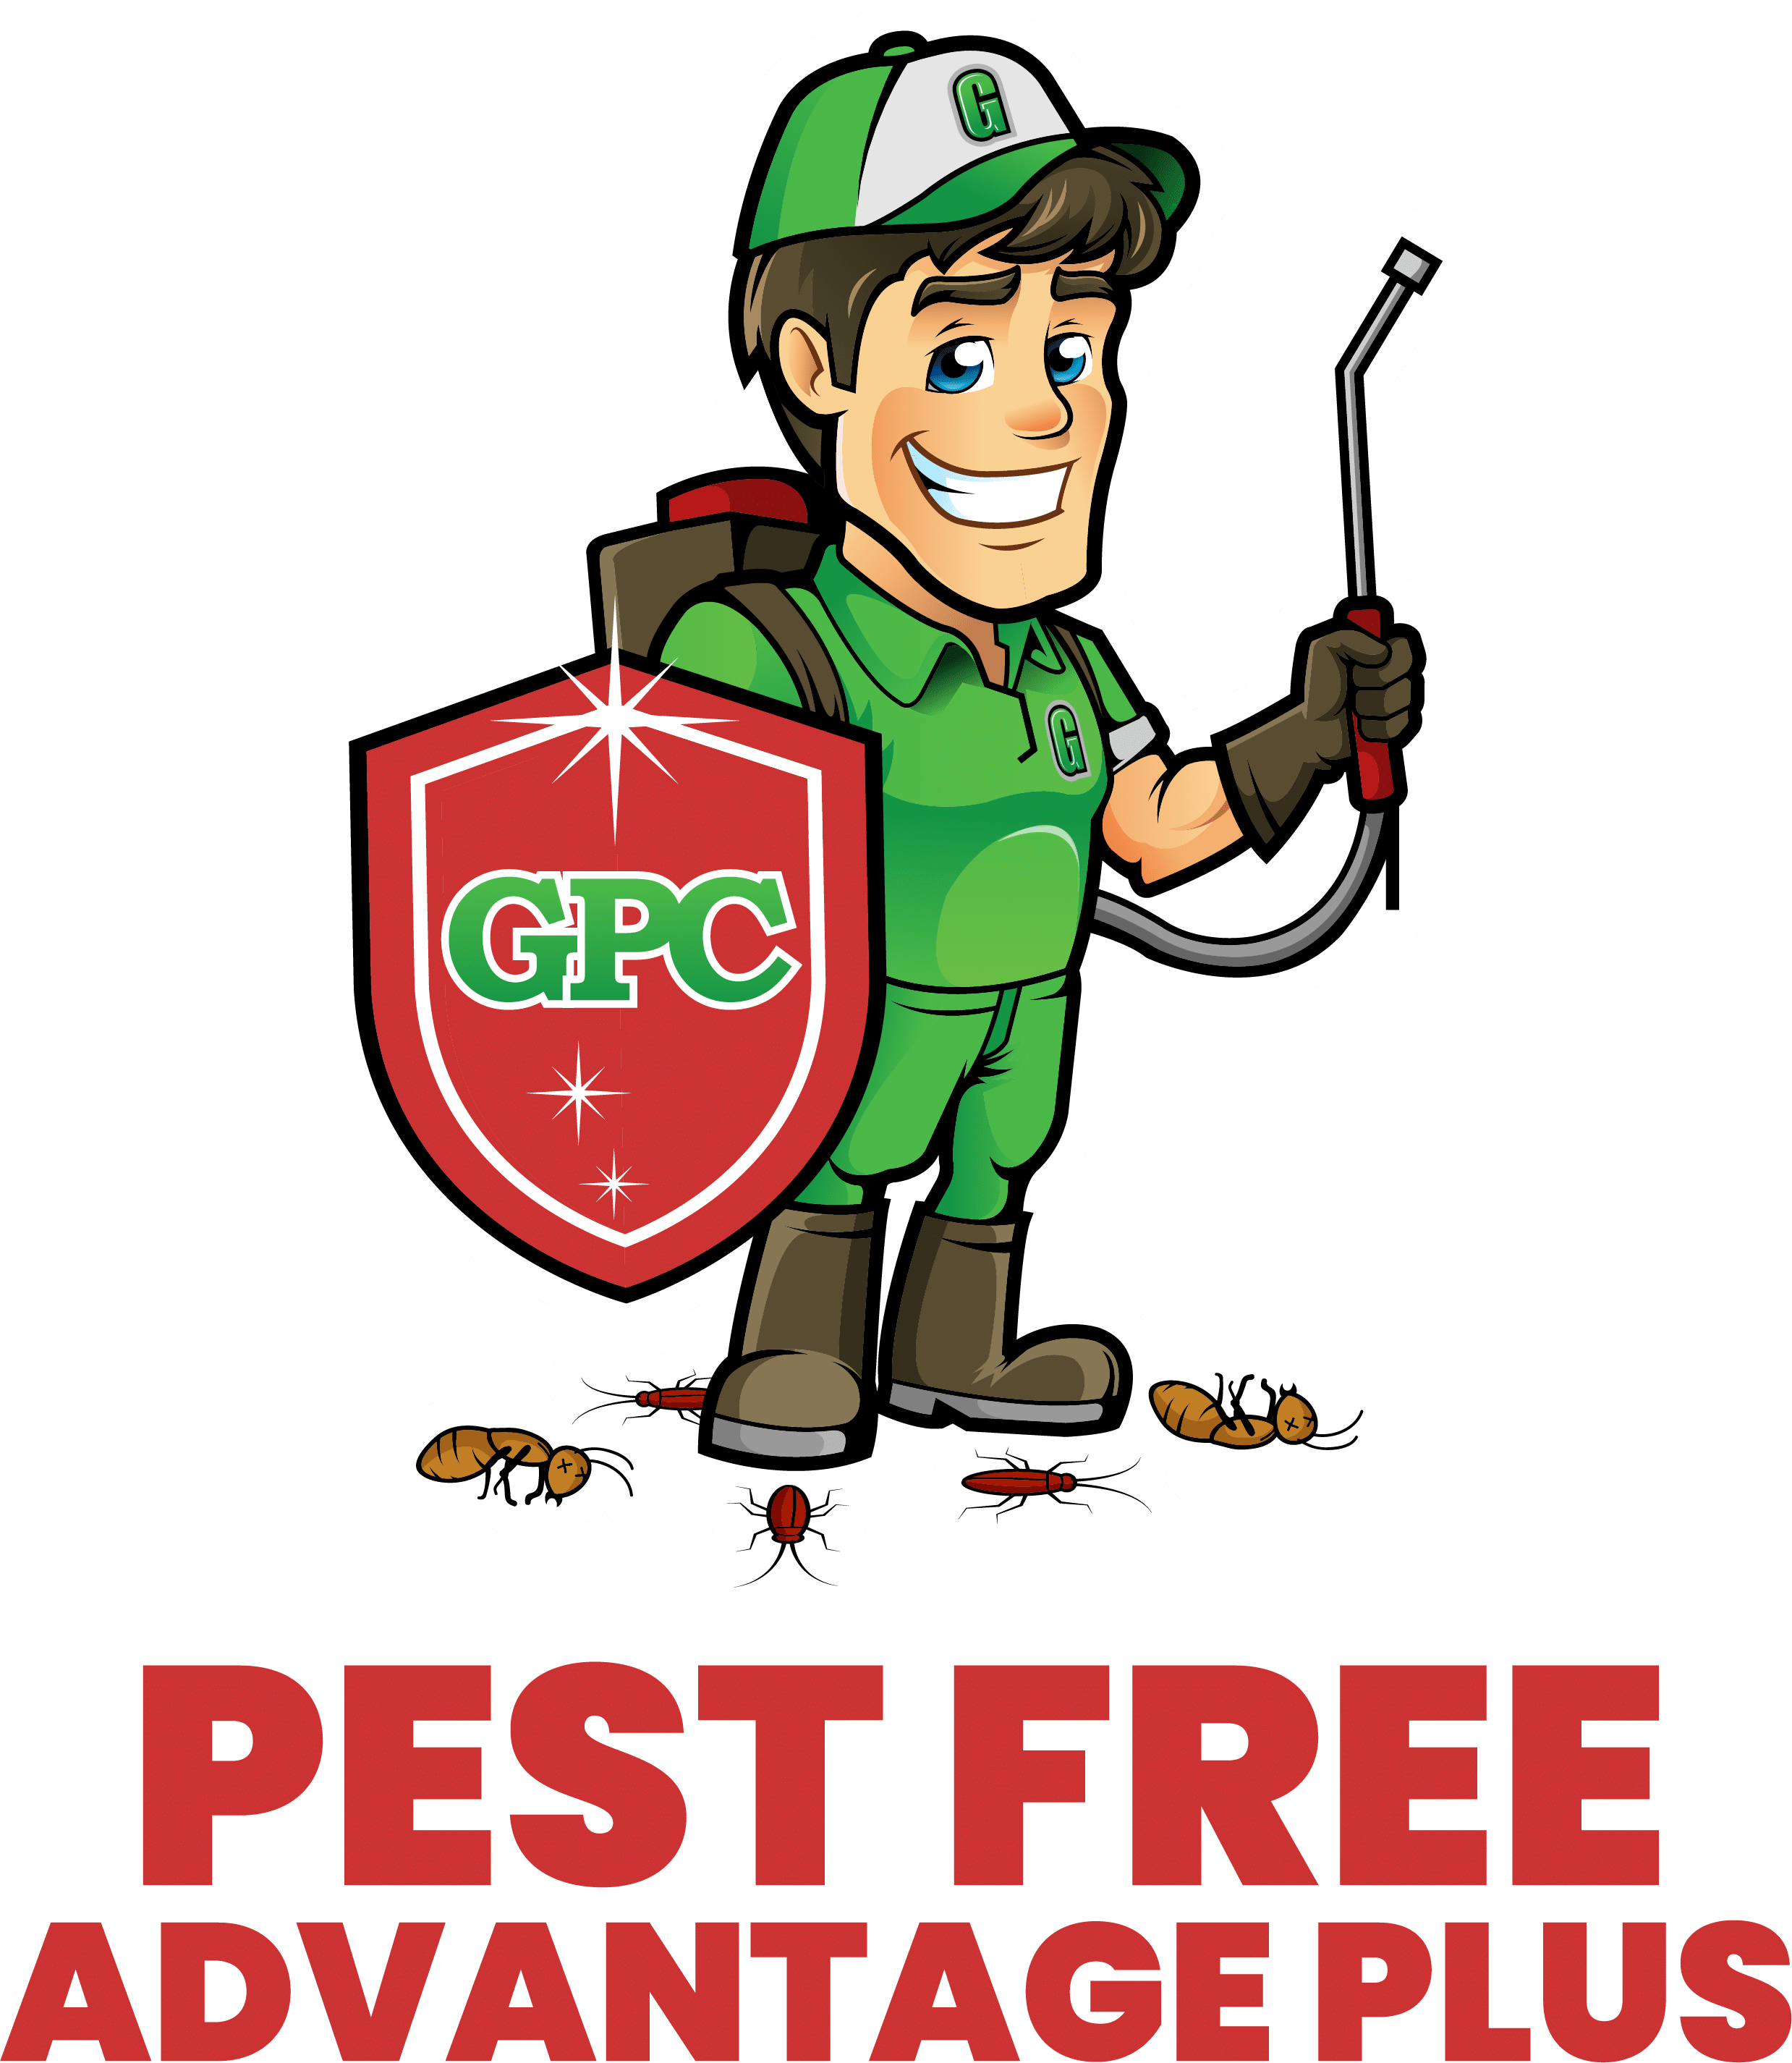 Pest Free Advantage Plus